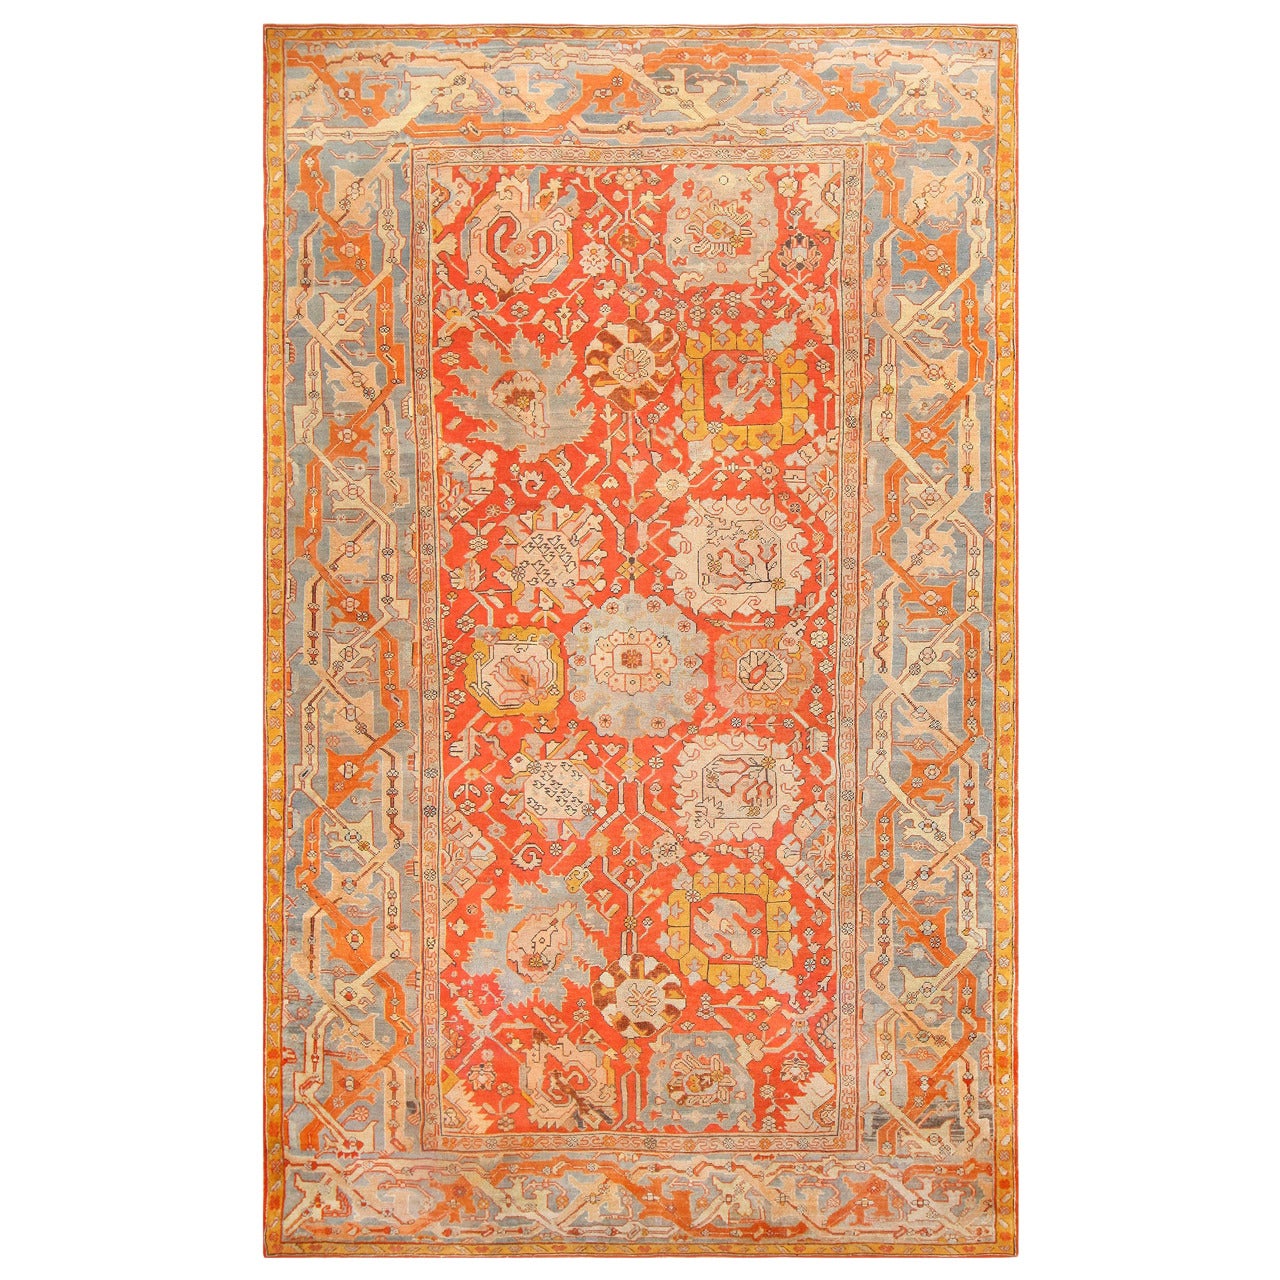 Gorgeous Antique Turkish Oushak Carpet